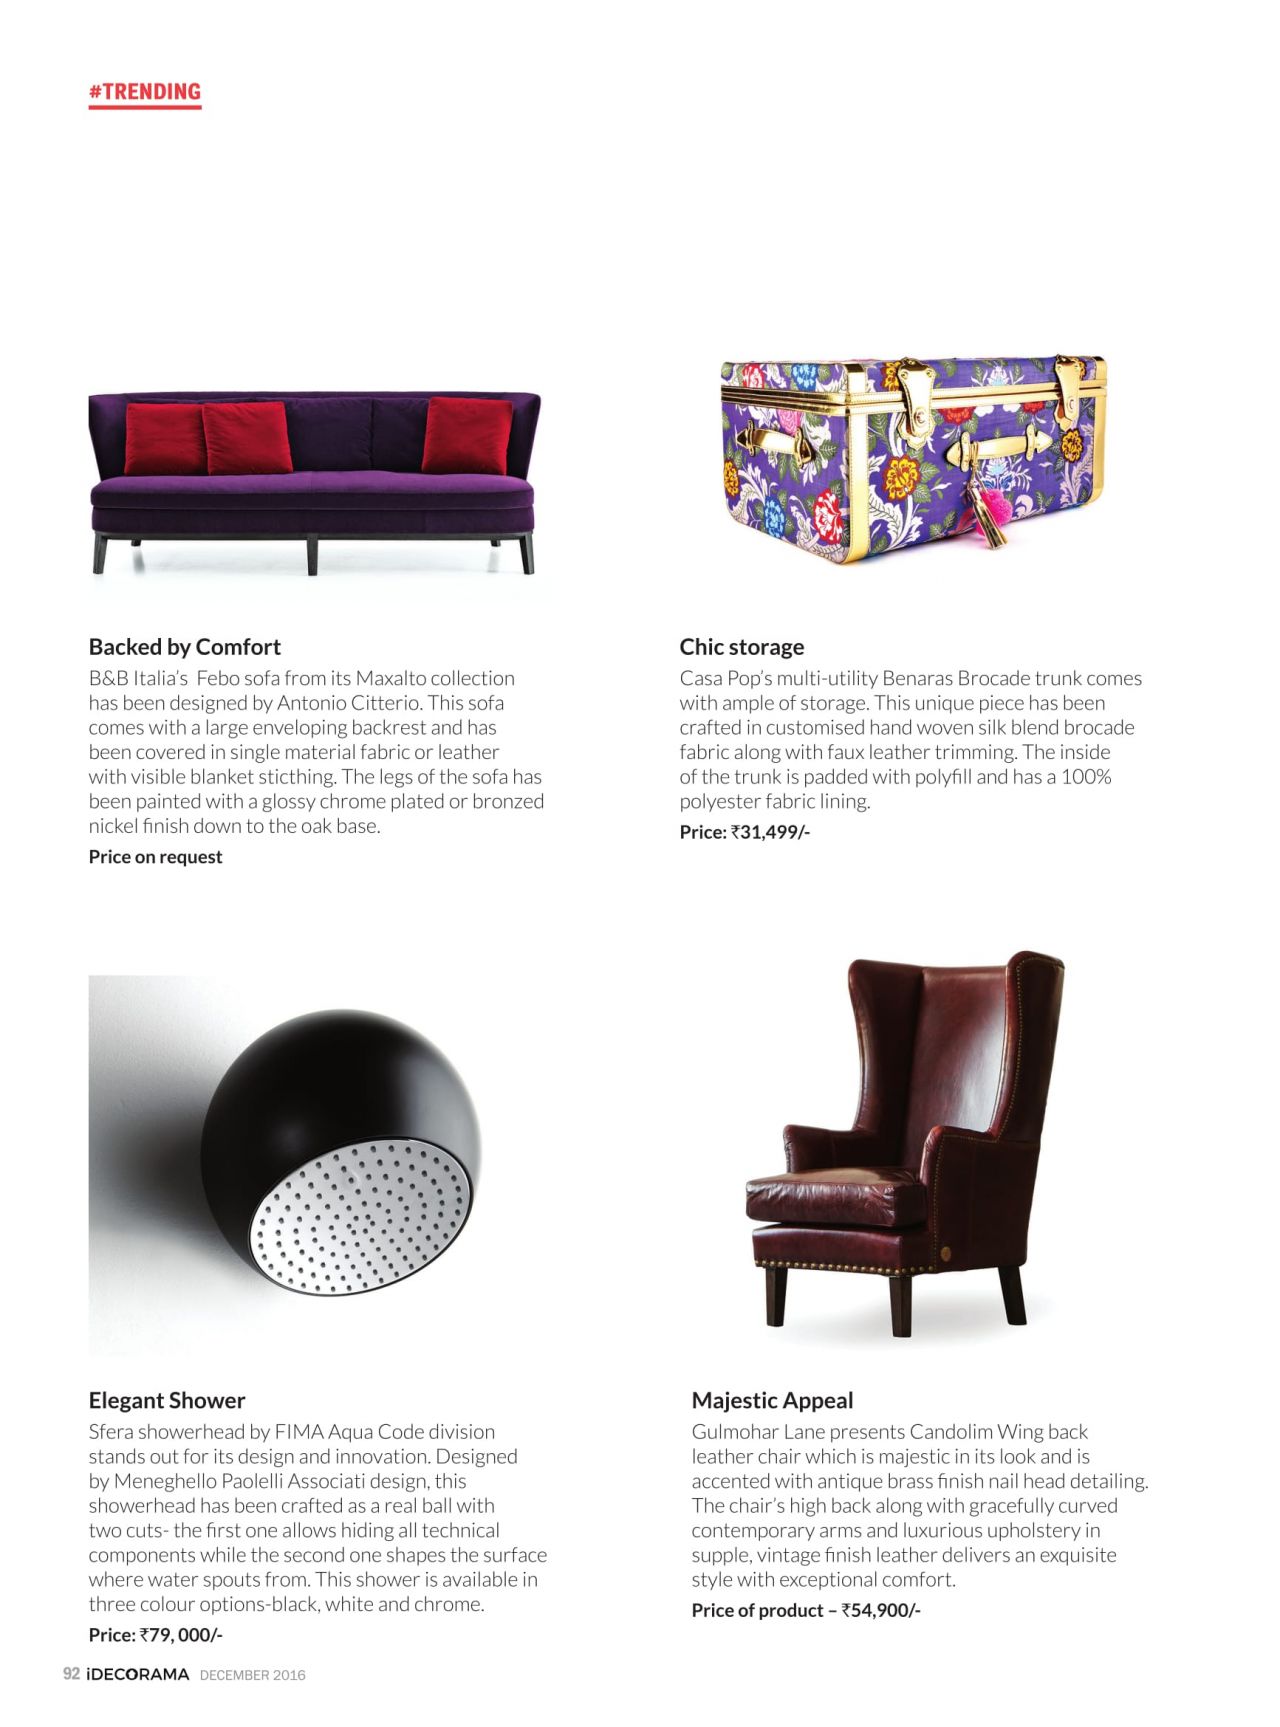 Candolim Wingback Chair | iDecorama Magazine